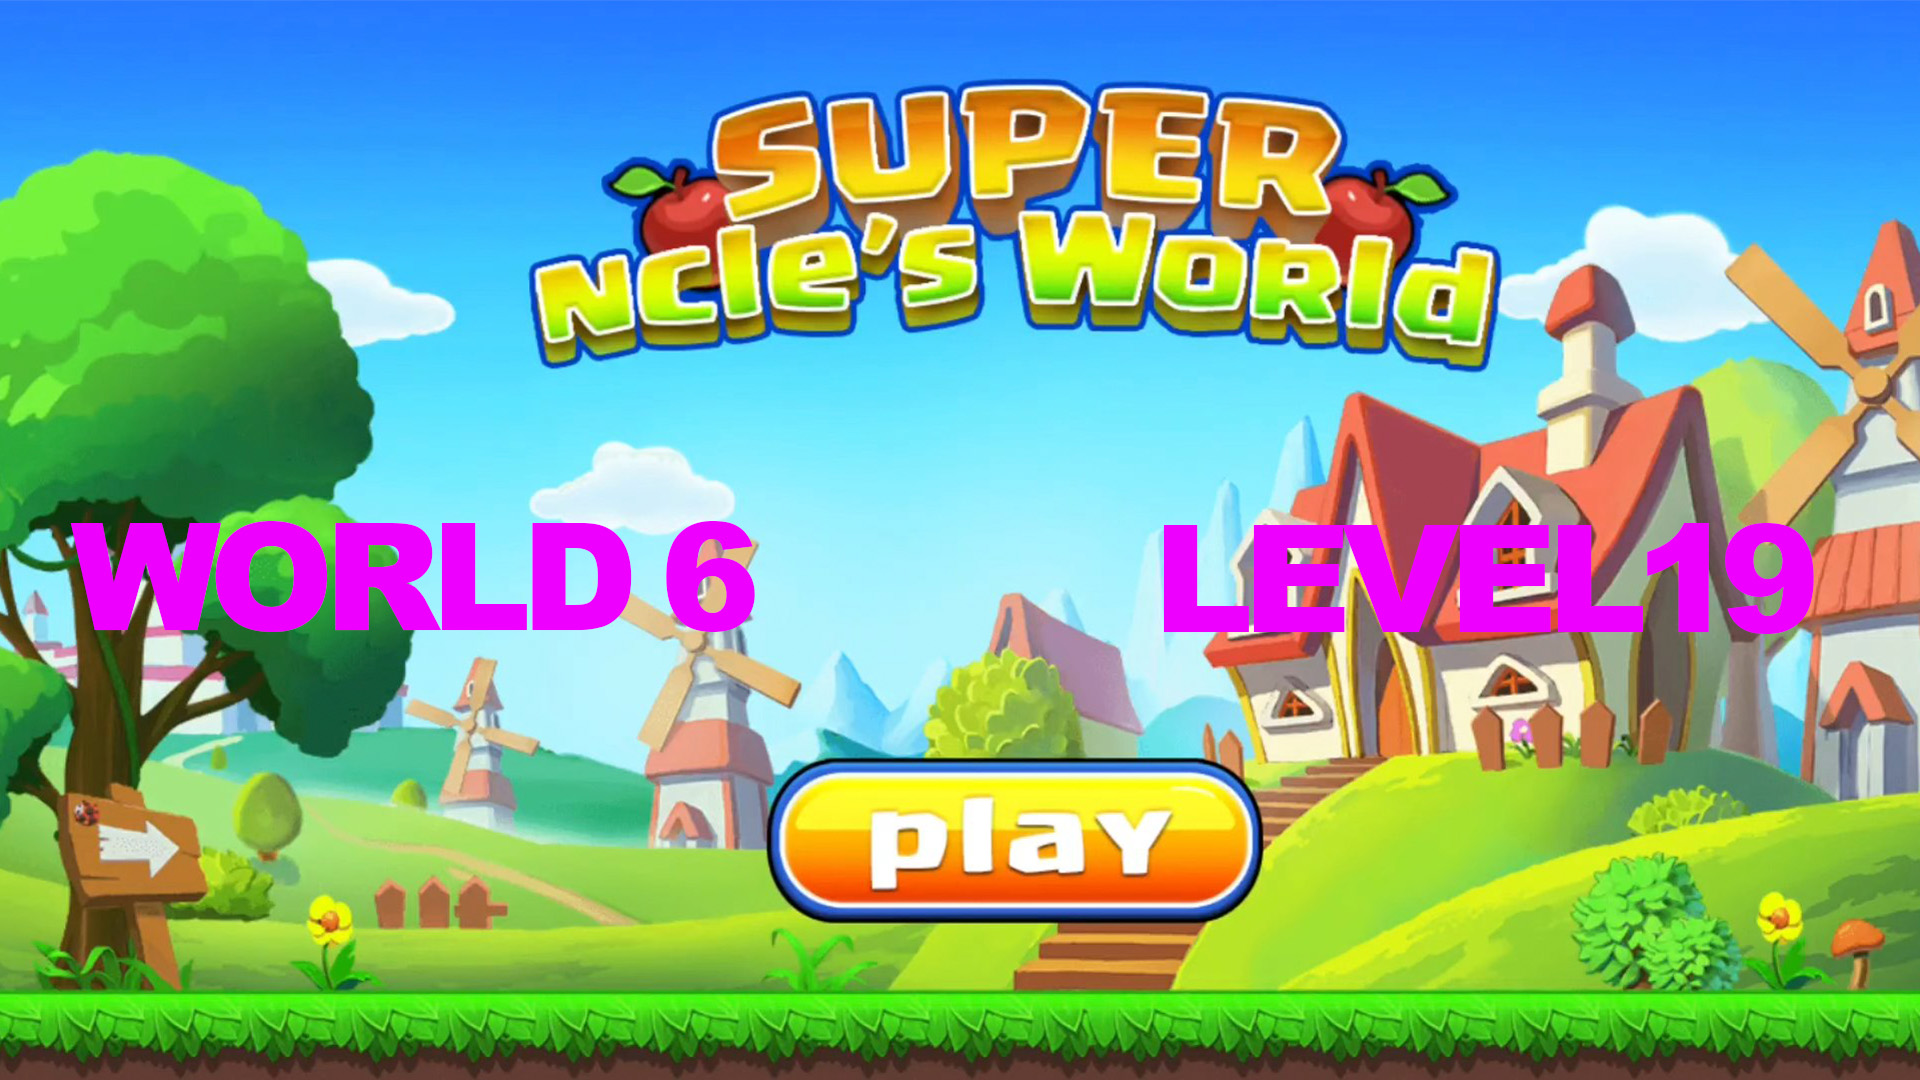 Super ncle's  World 6. Level 19.